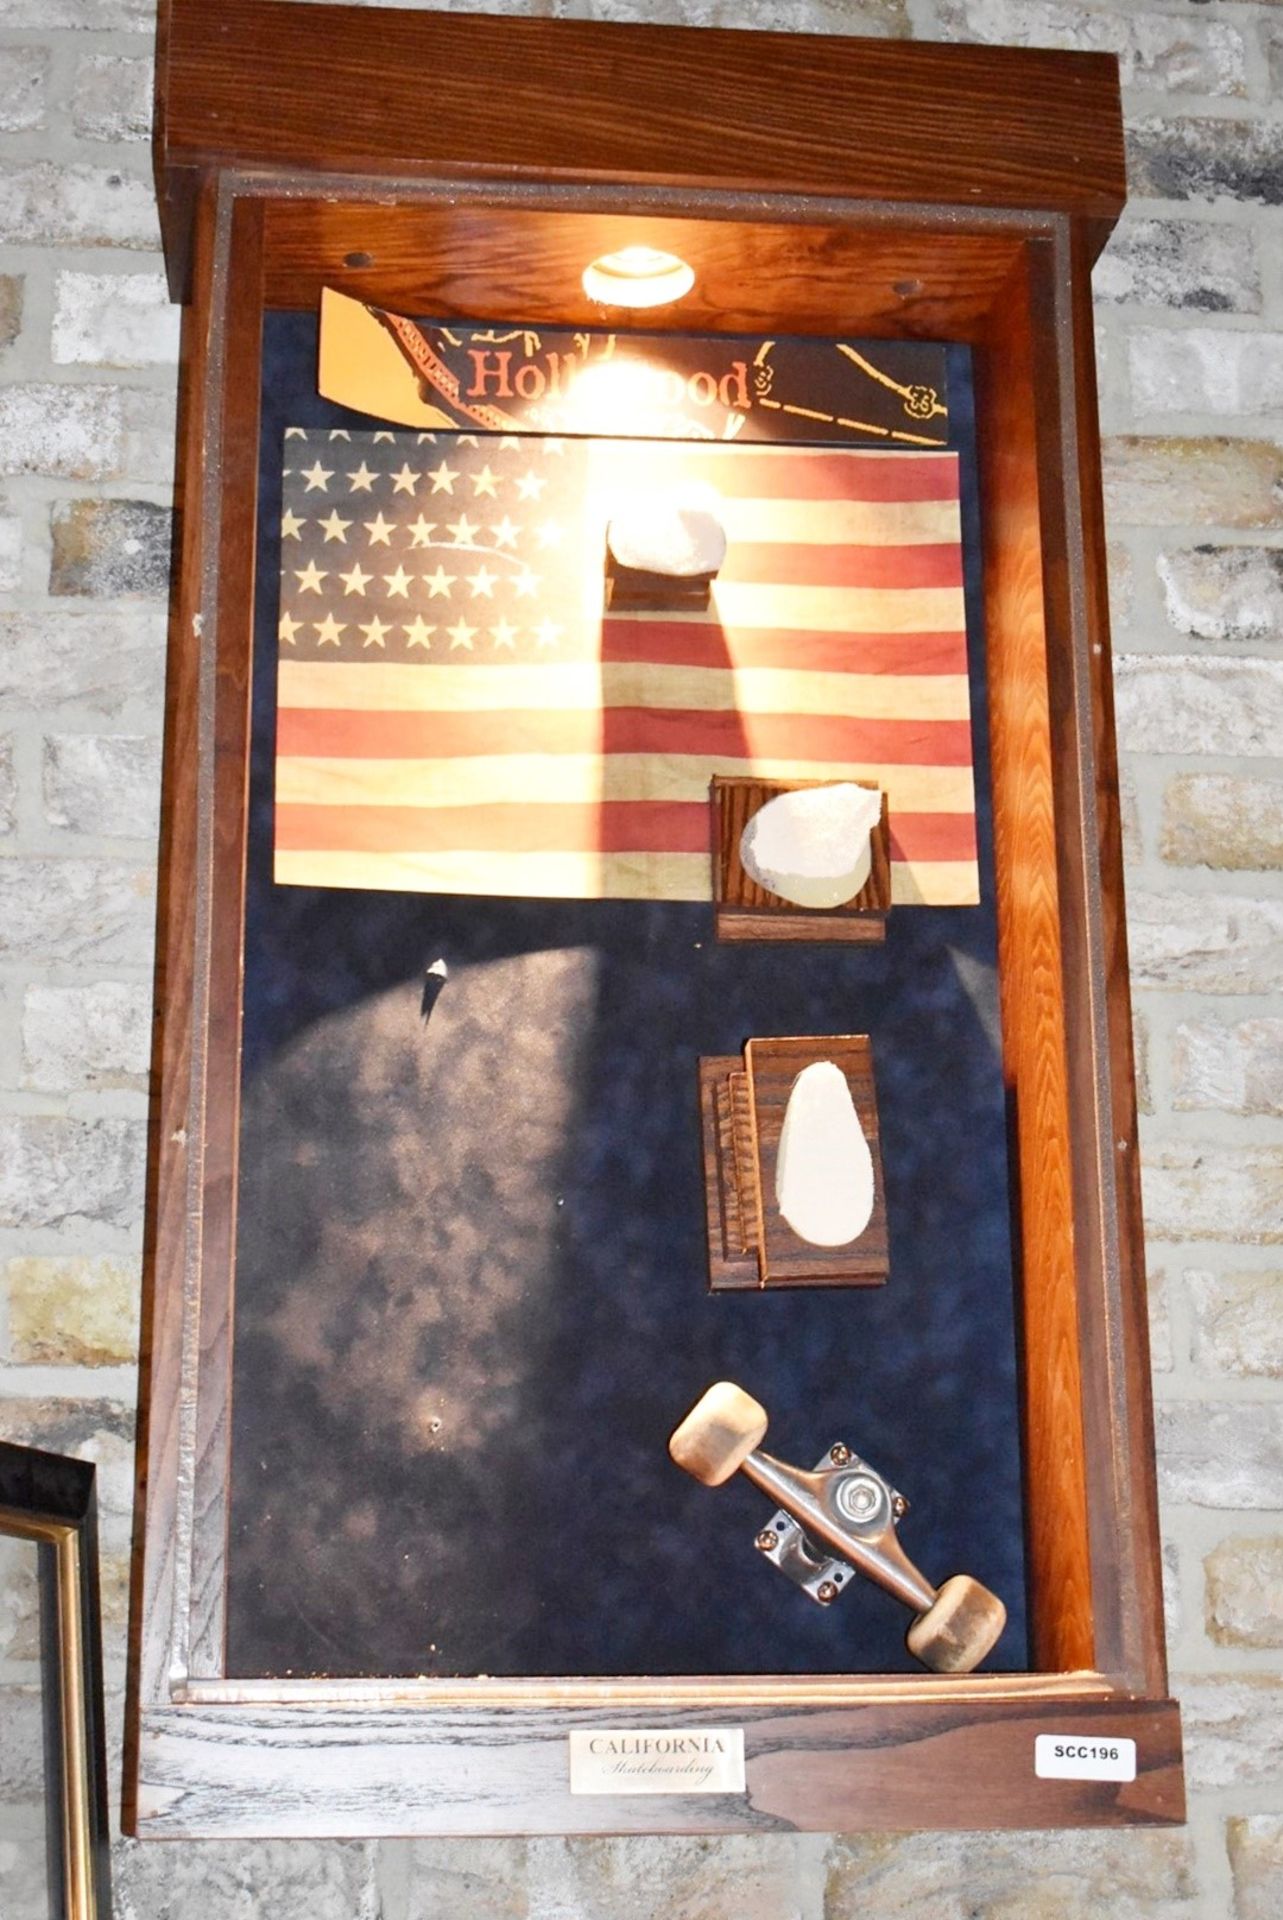 1 x Americana Wall Mounted Illuminated Display Case - SKATEBOADING - American Themed Showcase